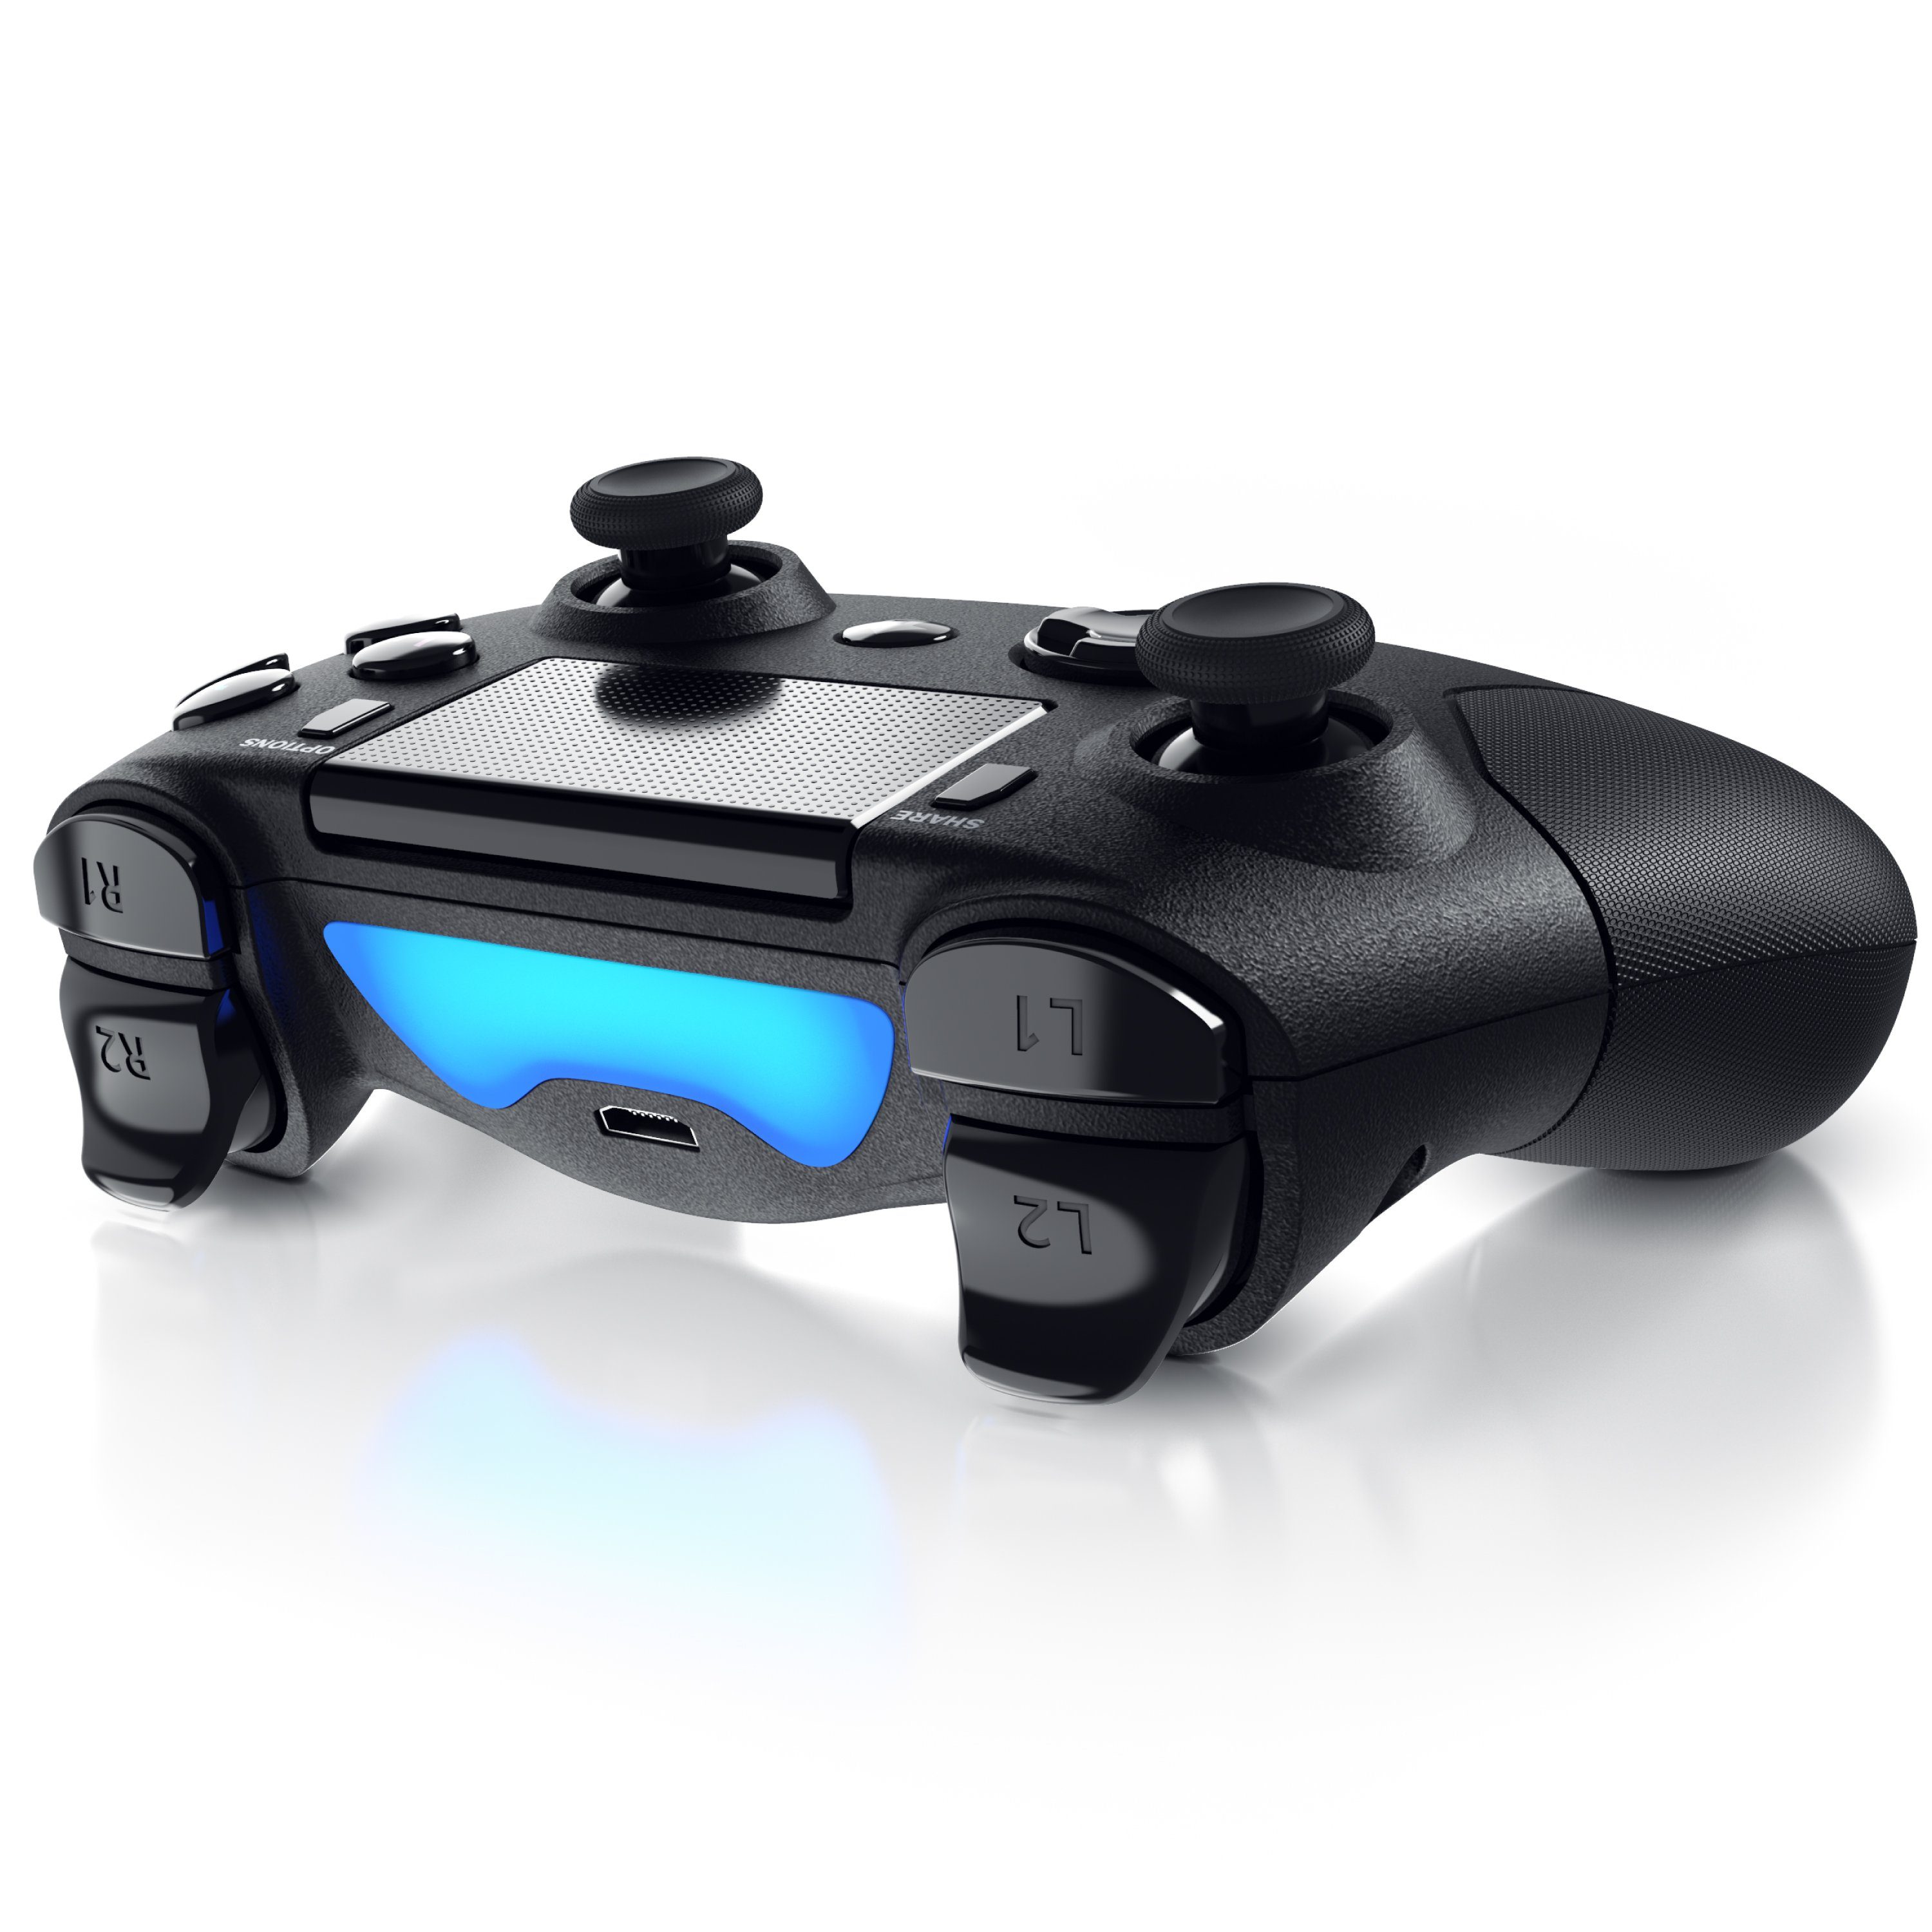 für PlayStation St., Bluetooth Vibration, Gamepad 3,5mm, Dual Touchpad, (1 4-Controller Gyrosensor) CSL PS4,